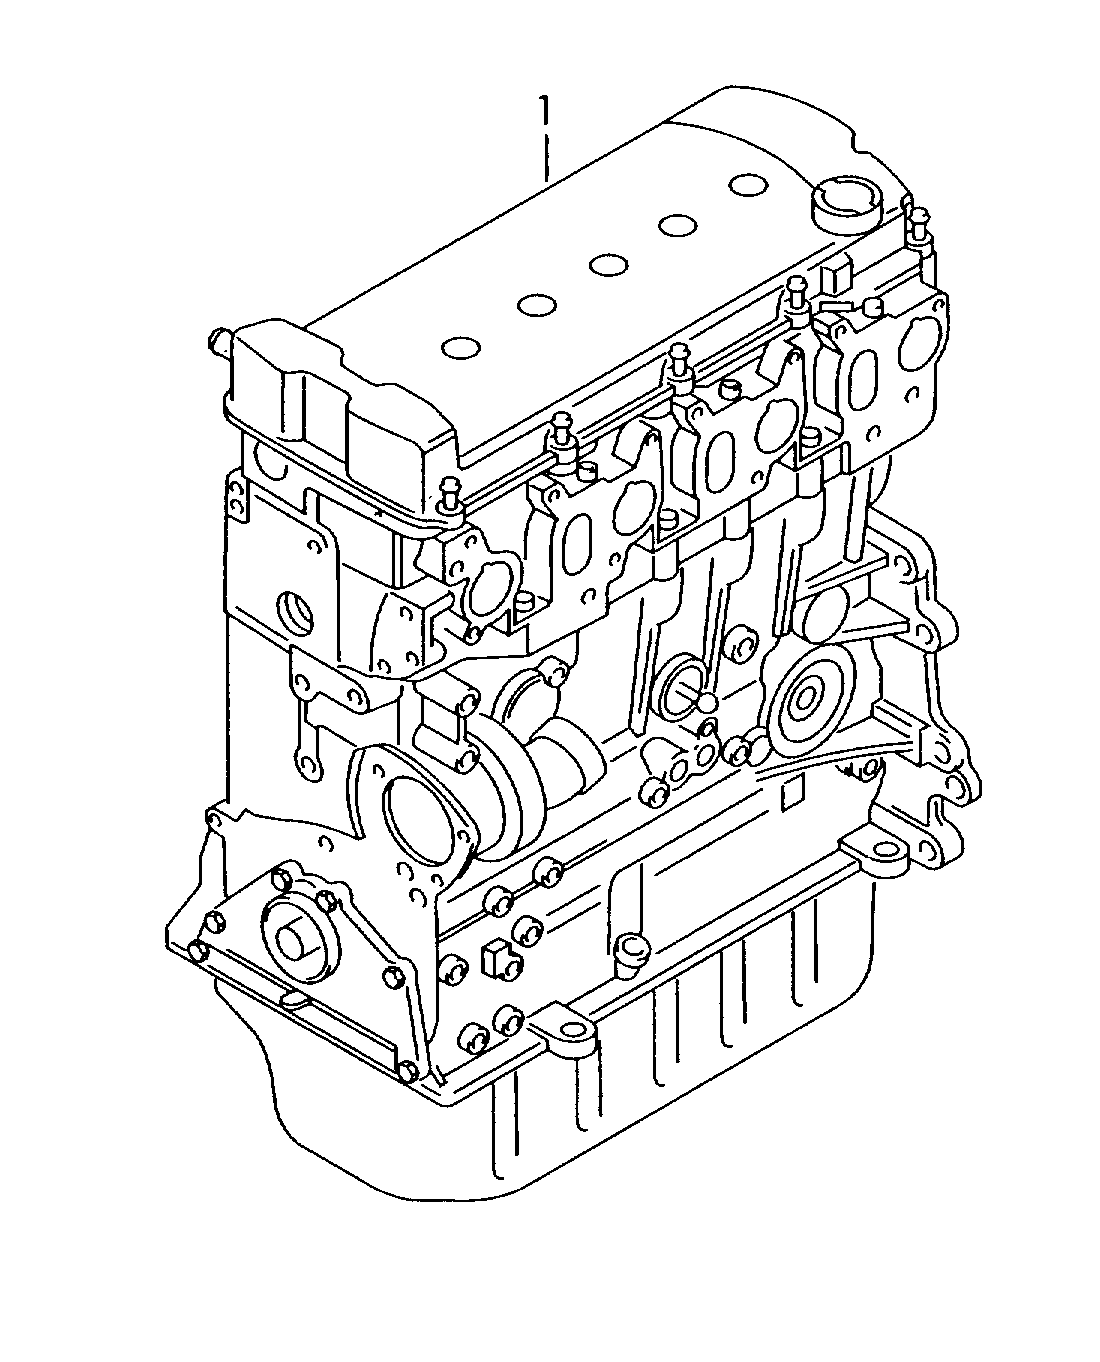 Motor basicoaccionamiento por gas 3,2l - Otto-/Gas-Ind.Motore - imot